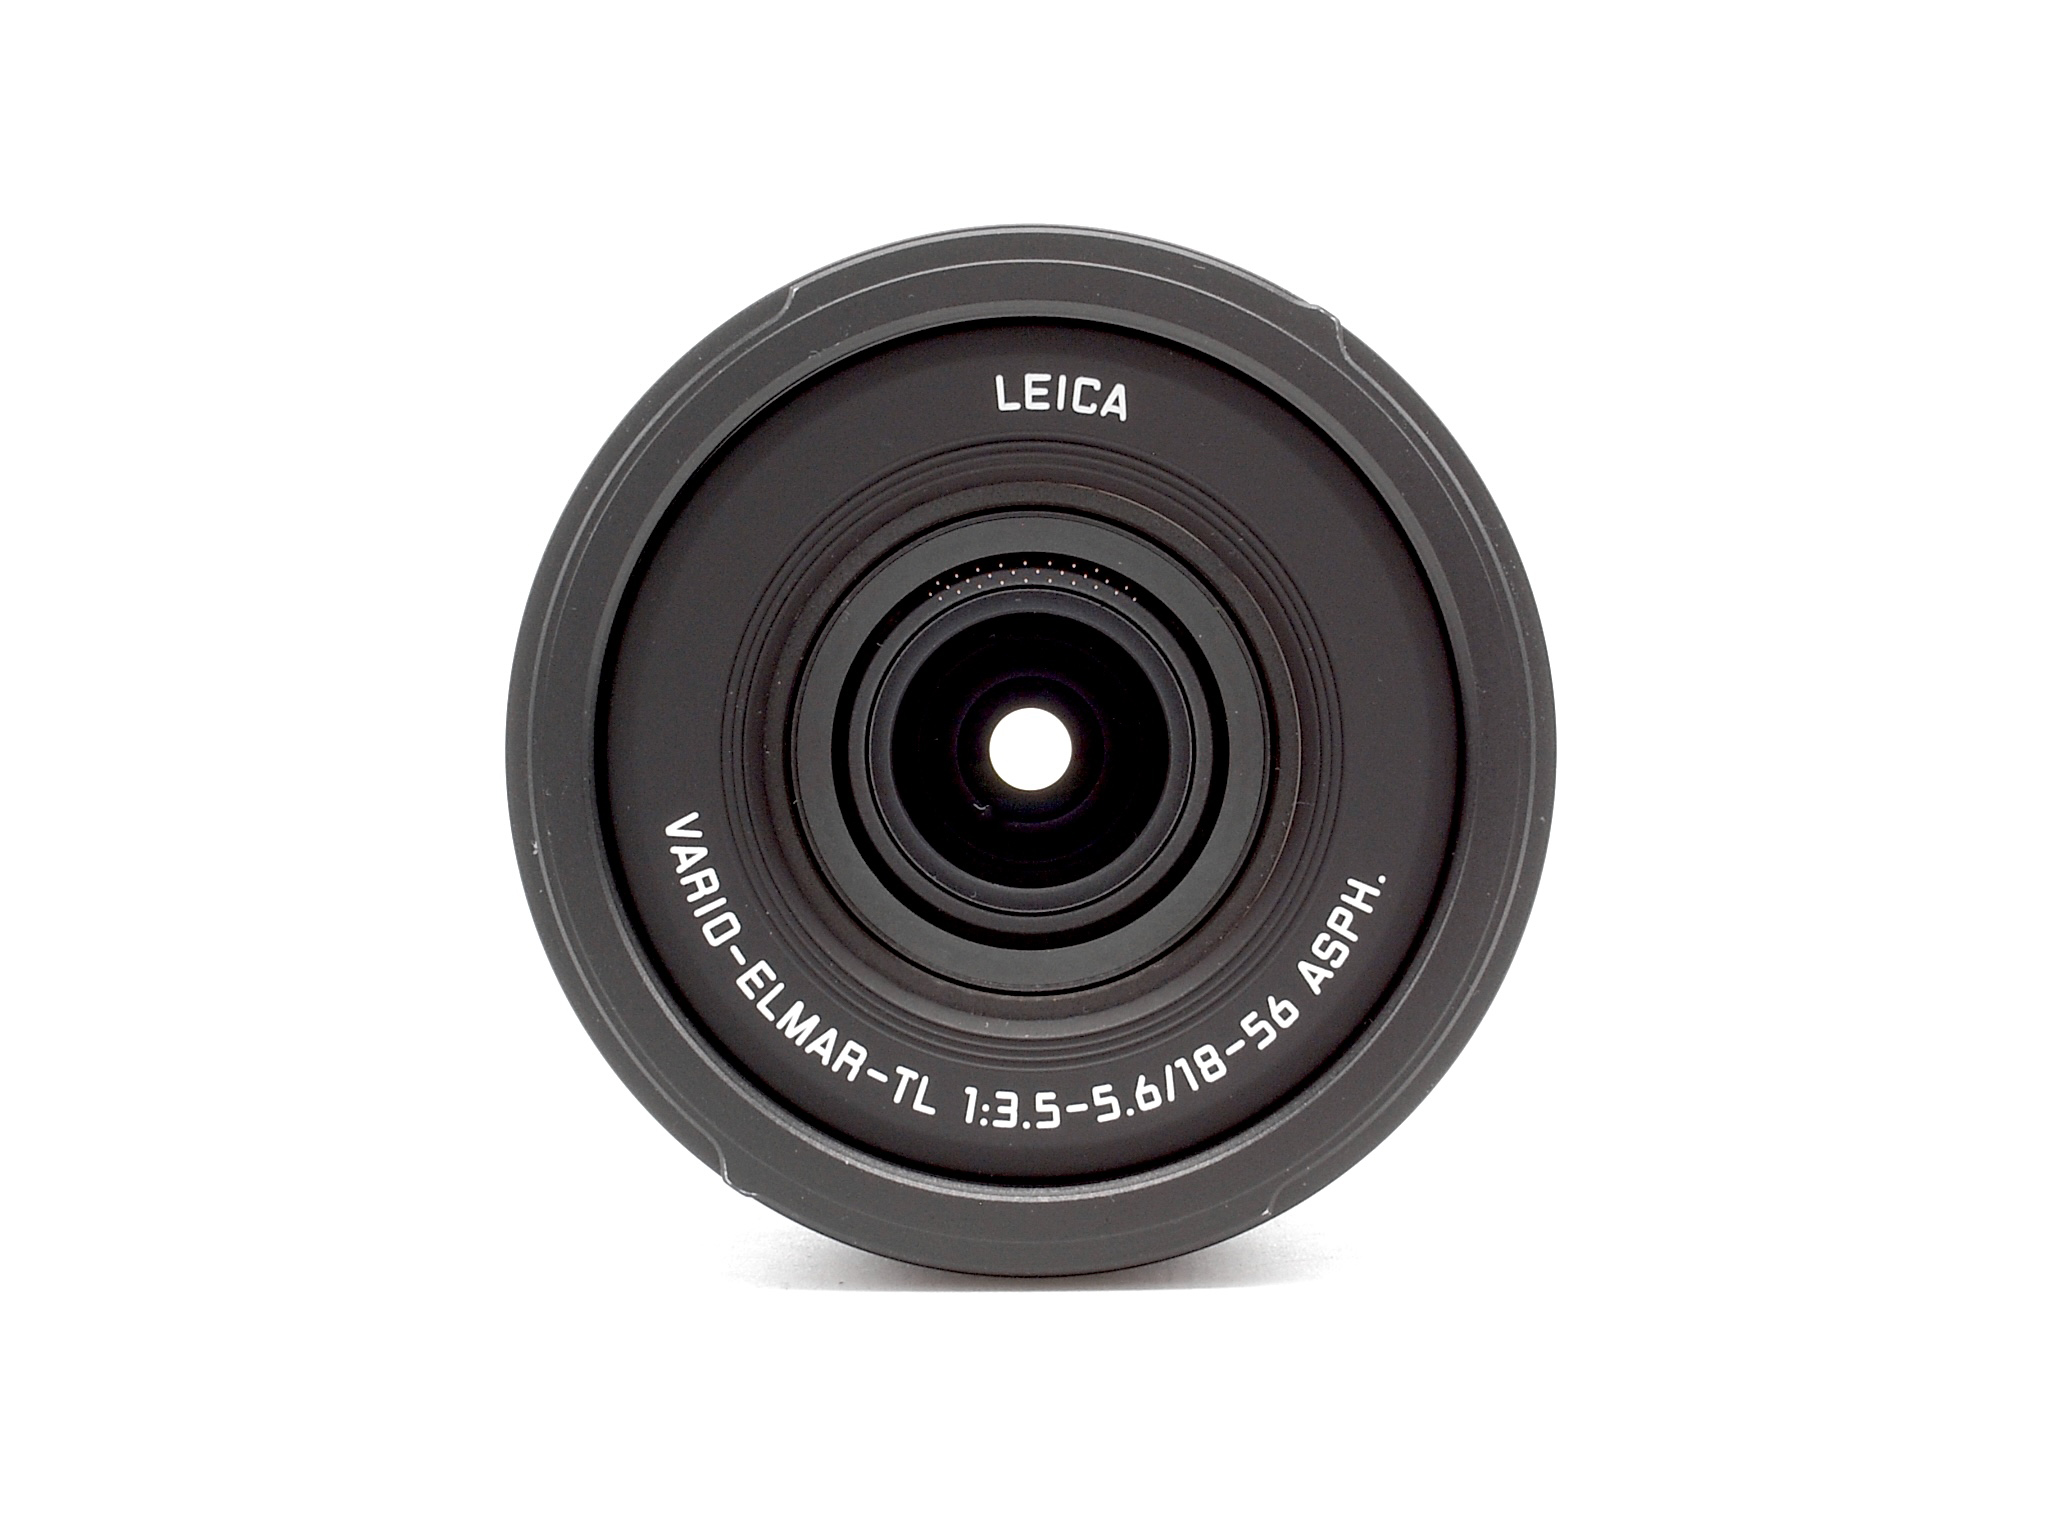 Leica Vario-Elmar-TL 3.5-5.6/18-56mm ASPH. schwarz